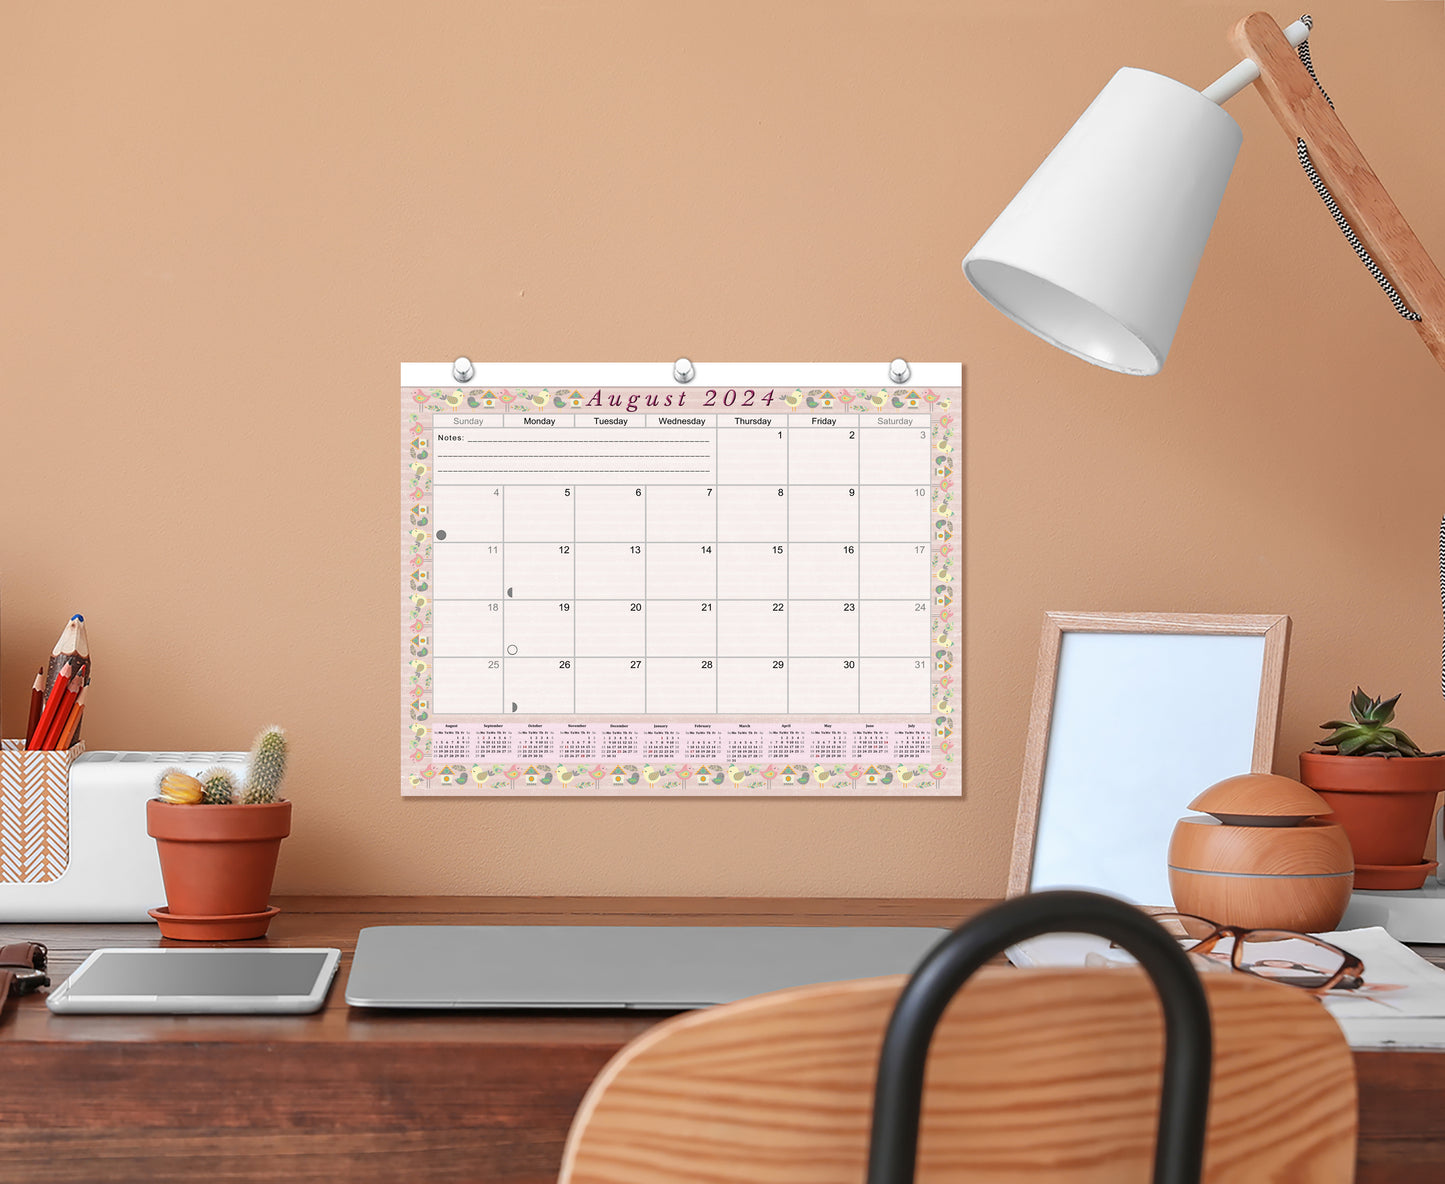 2024-2025 Academic Year 12 Months Student Calendar/Planner for 3-Ring Binder, Desk or Wall -v002